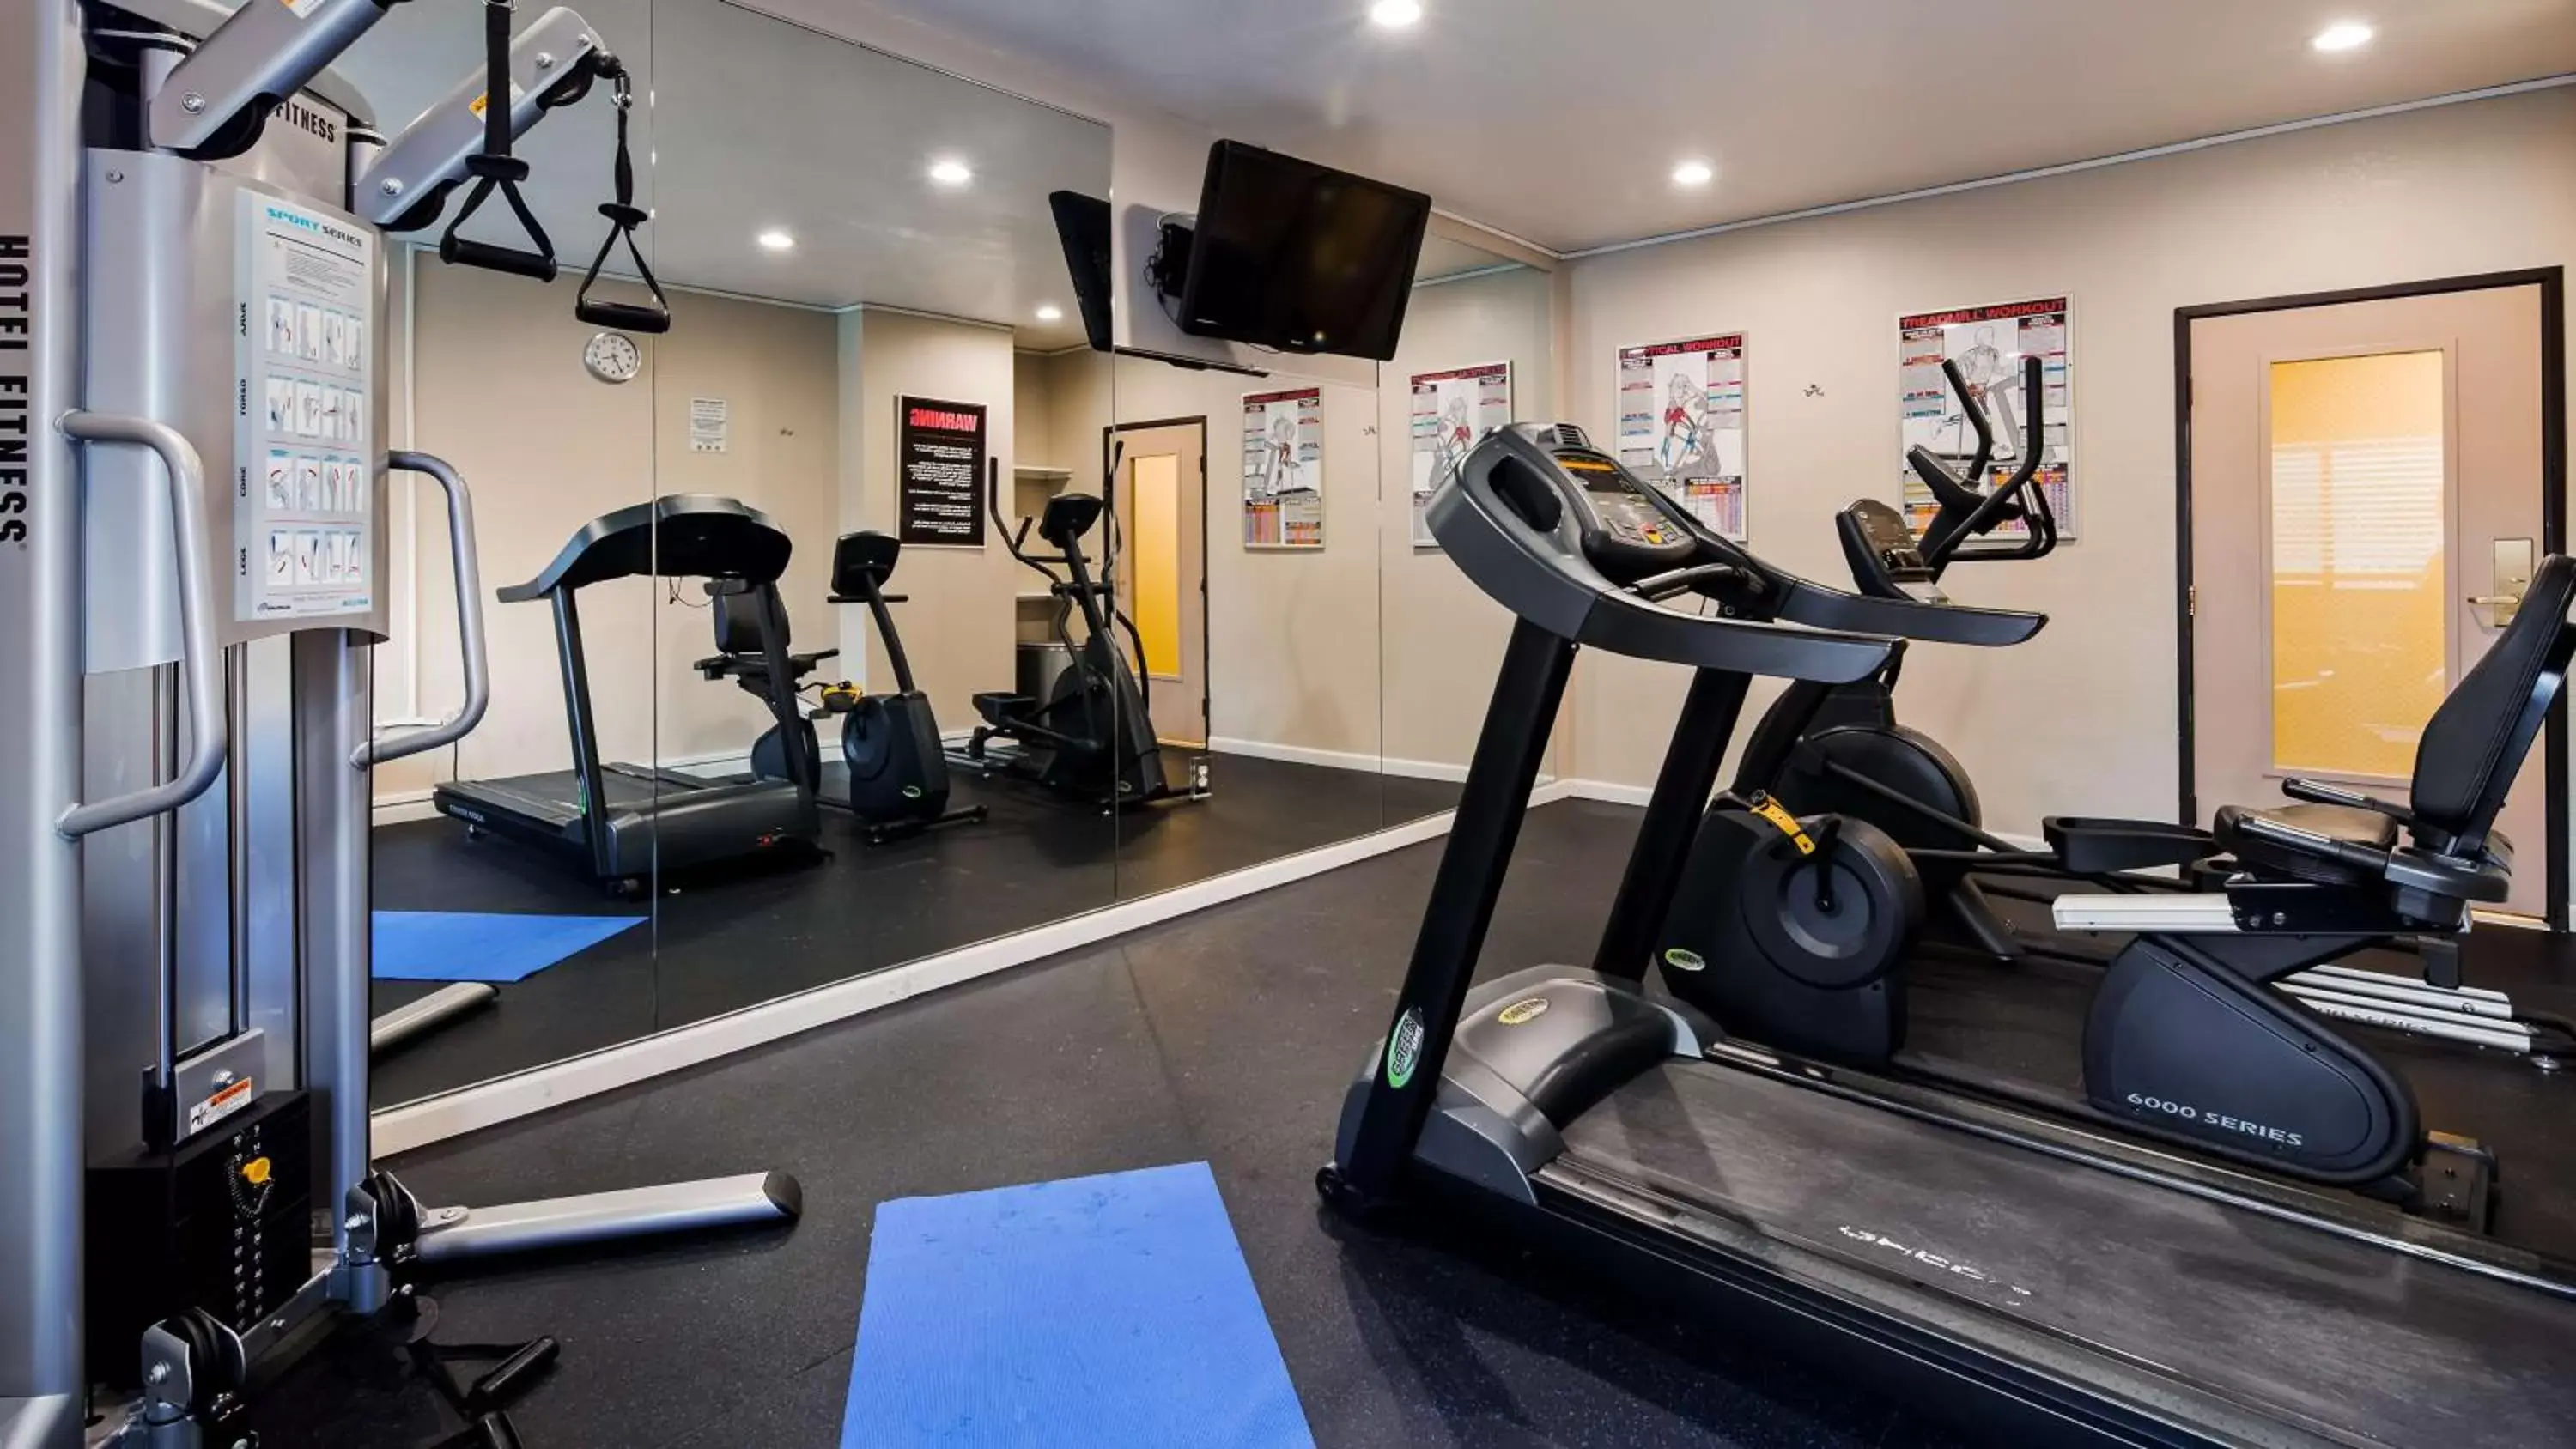 Fitness centre/facilities, Fitness Center/Facilities in Best Western John Muir Inn